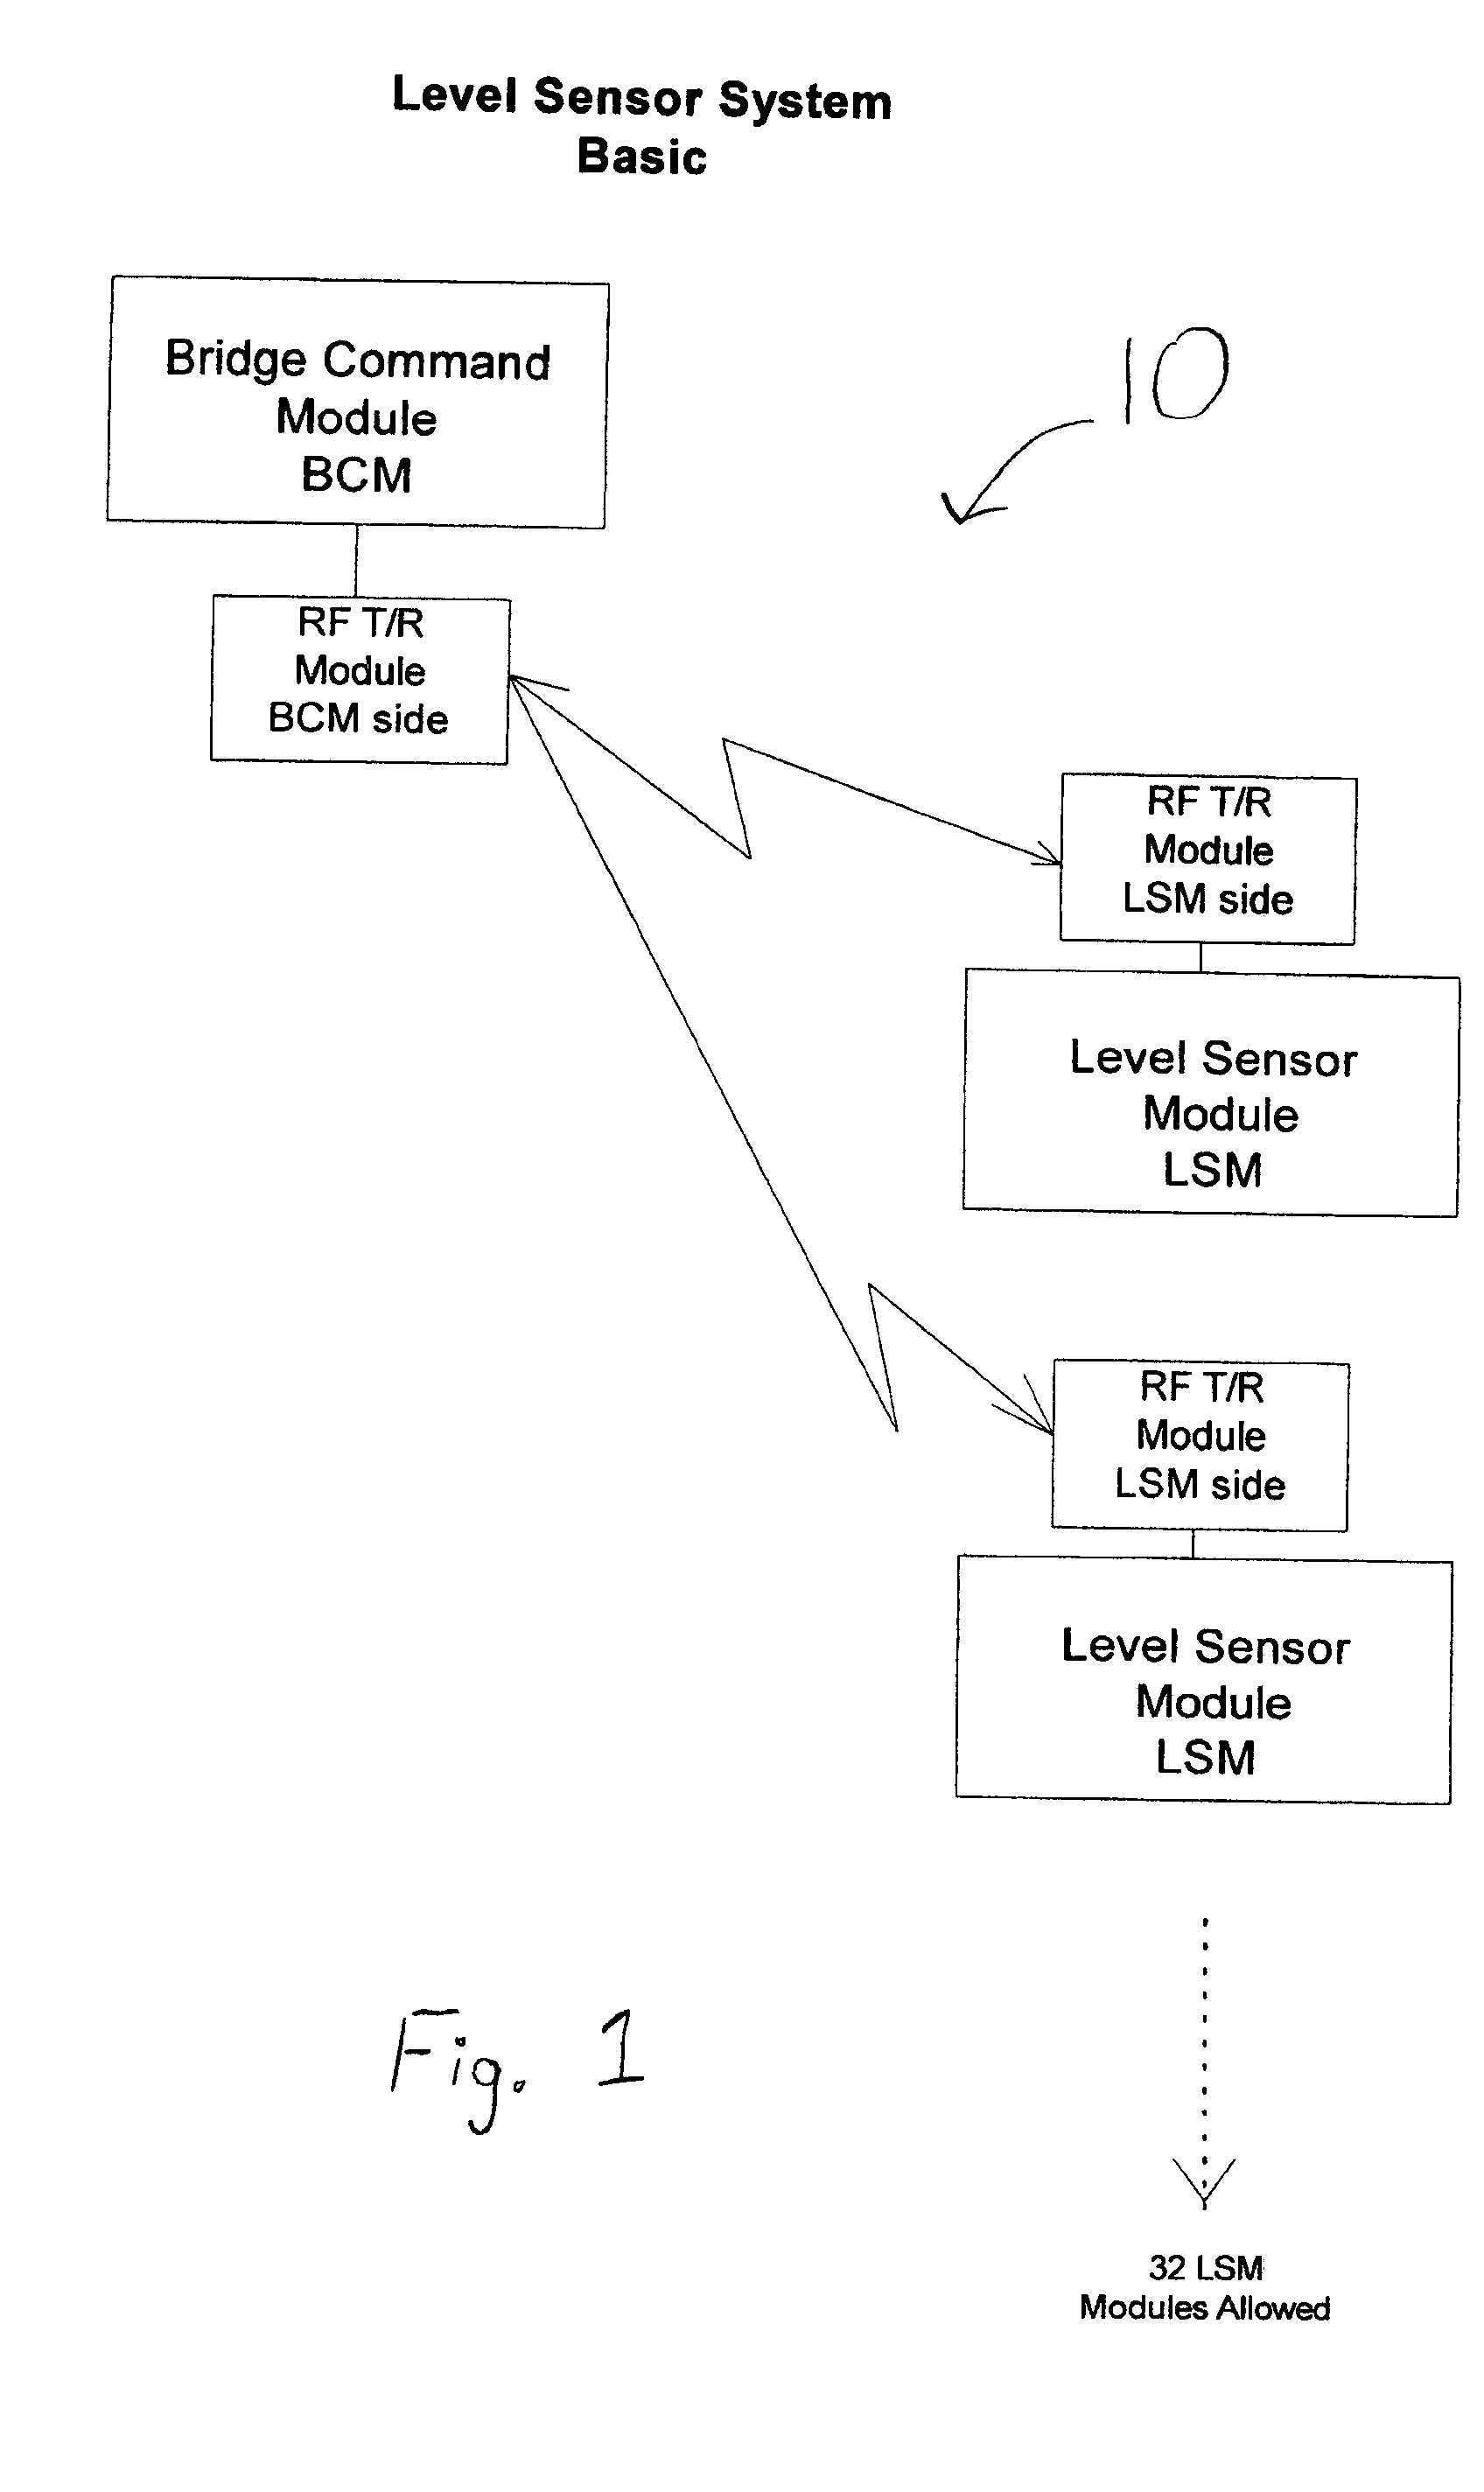 Level Sensor System